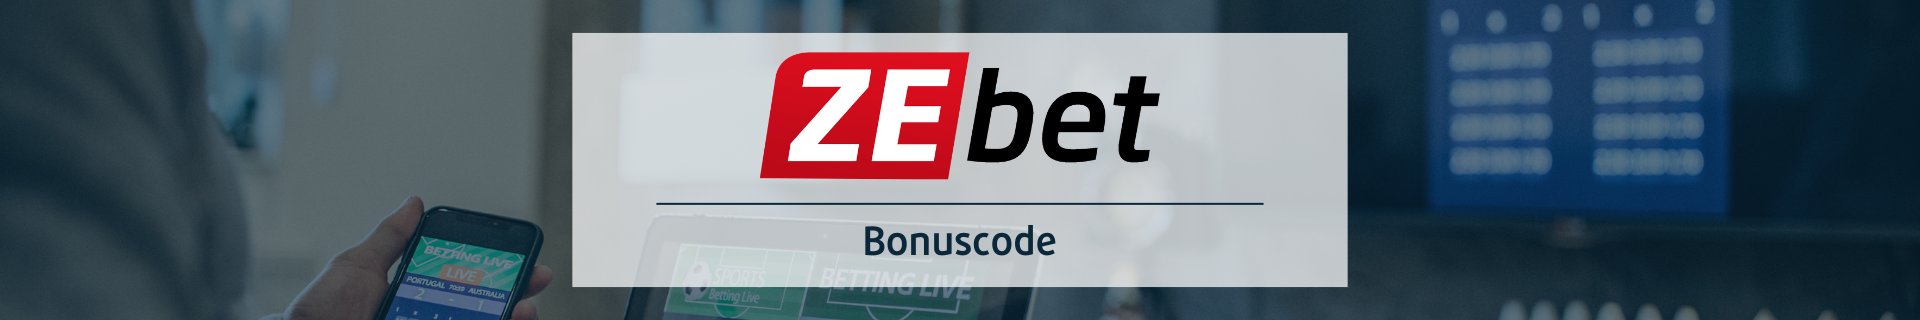 ZEbet bonus code